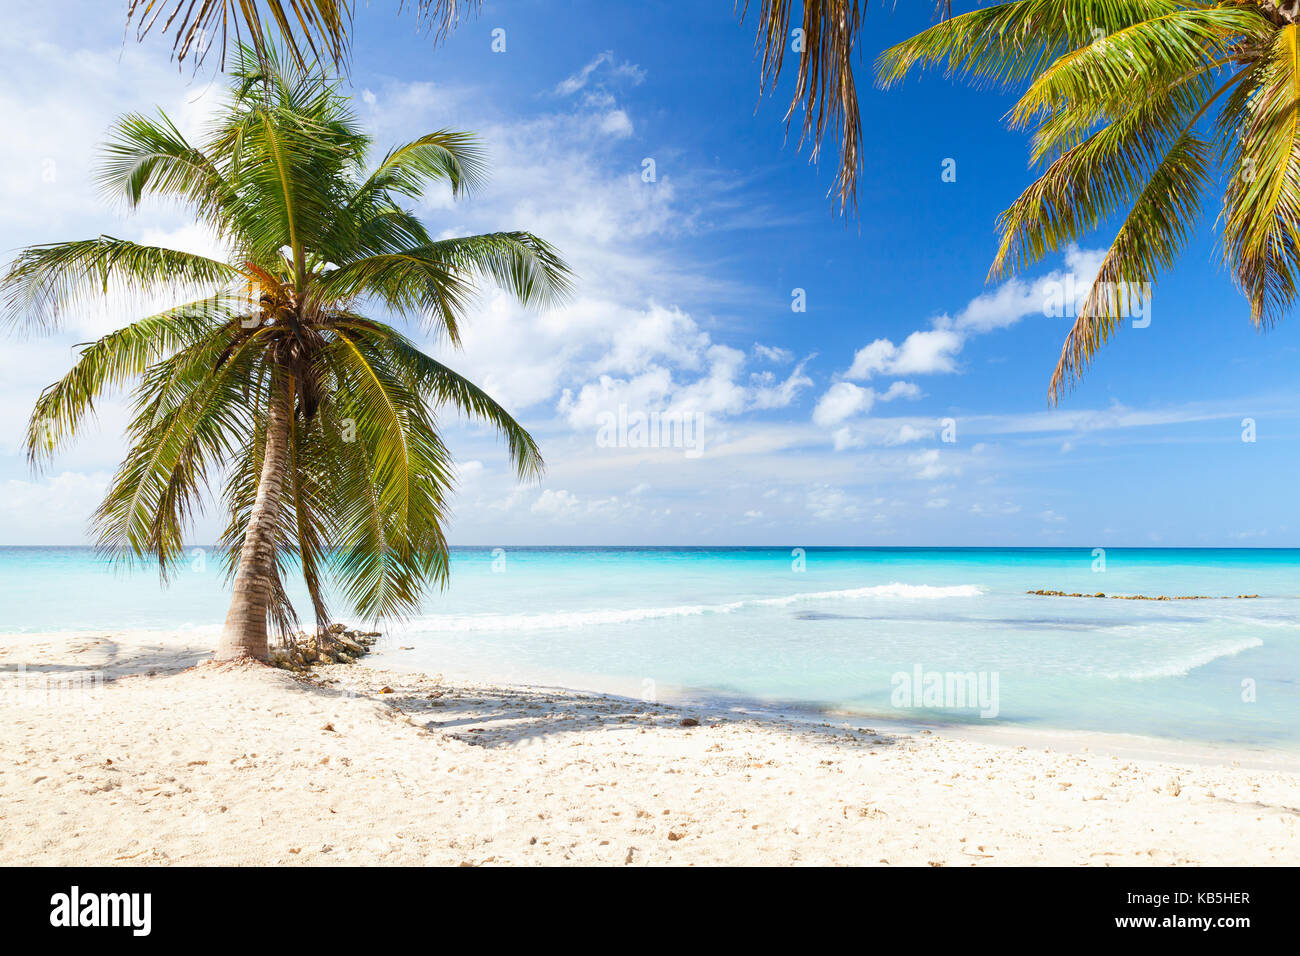 Coconut palm trees grow on white sandy beach. Caribbean Sea, Dominican republic, Saona island Stock Photo